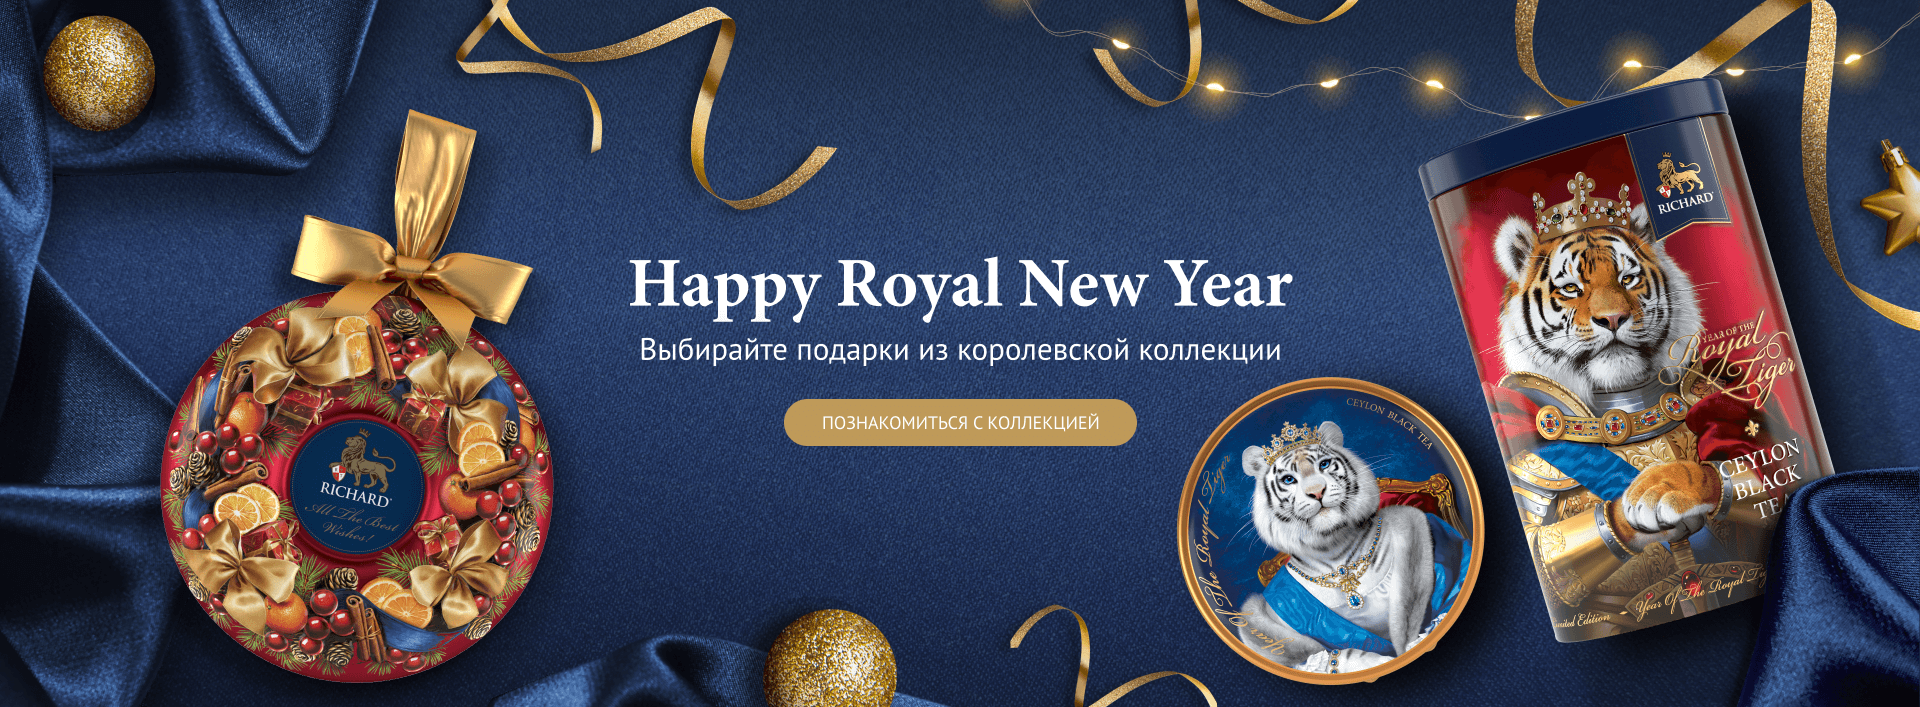 Happy Royal New Year